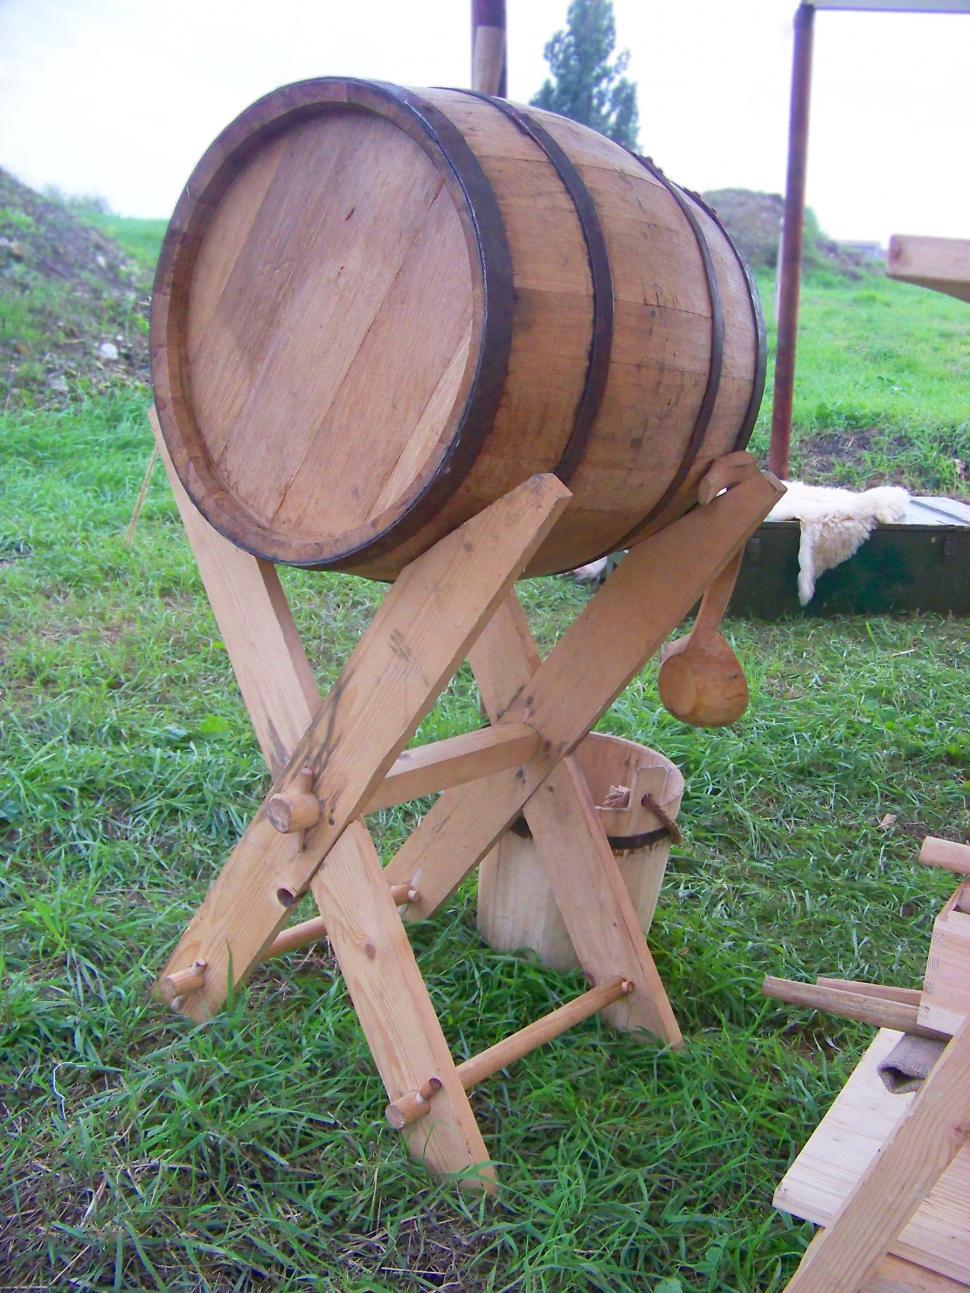 Free Image of Barrel on sawbuck   